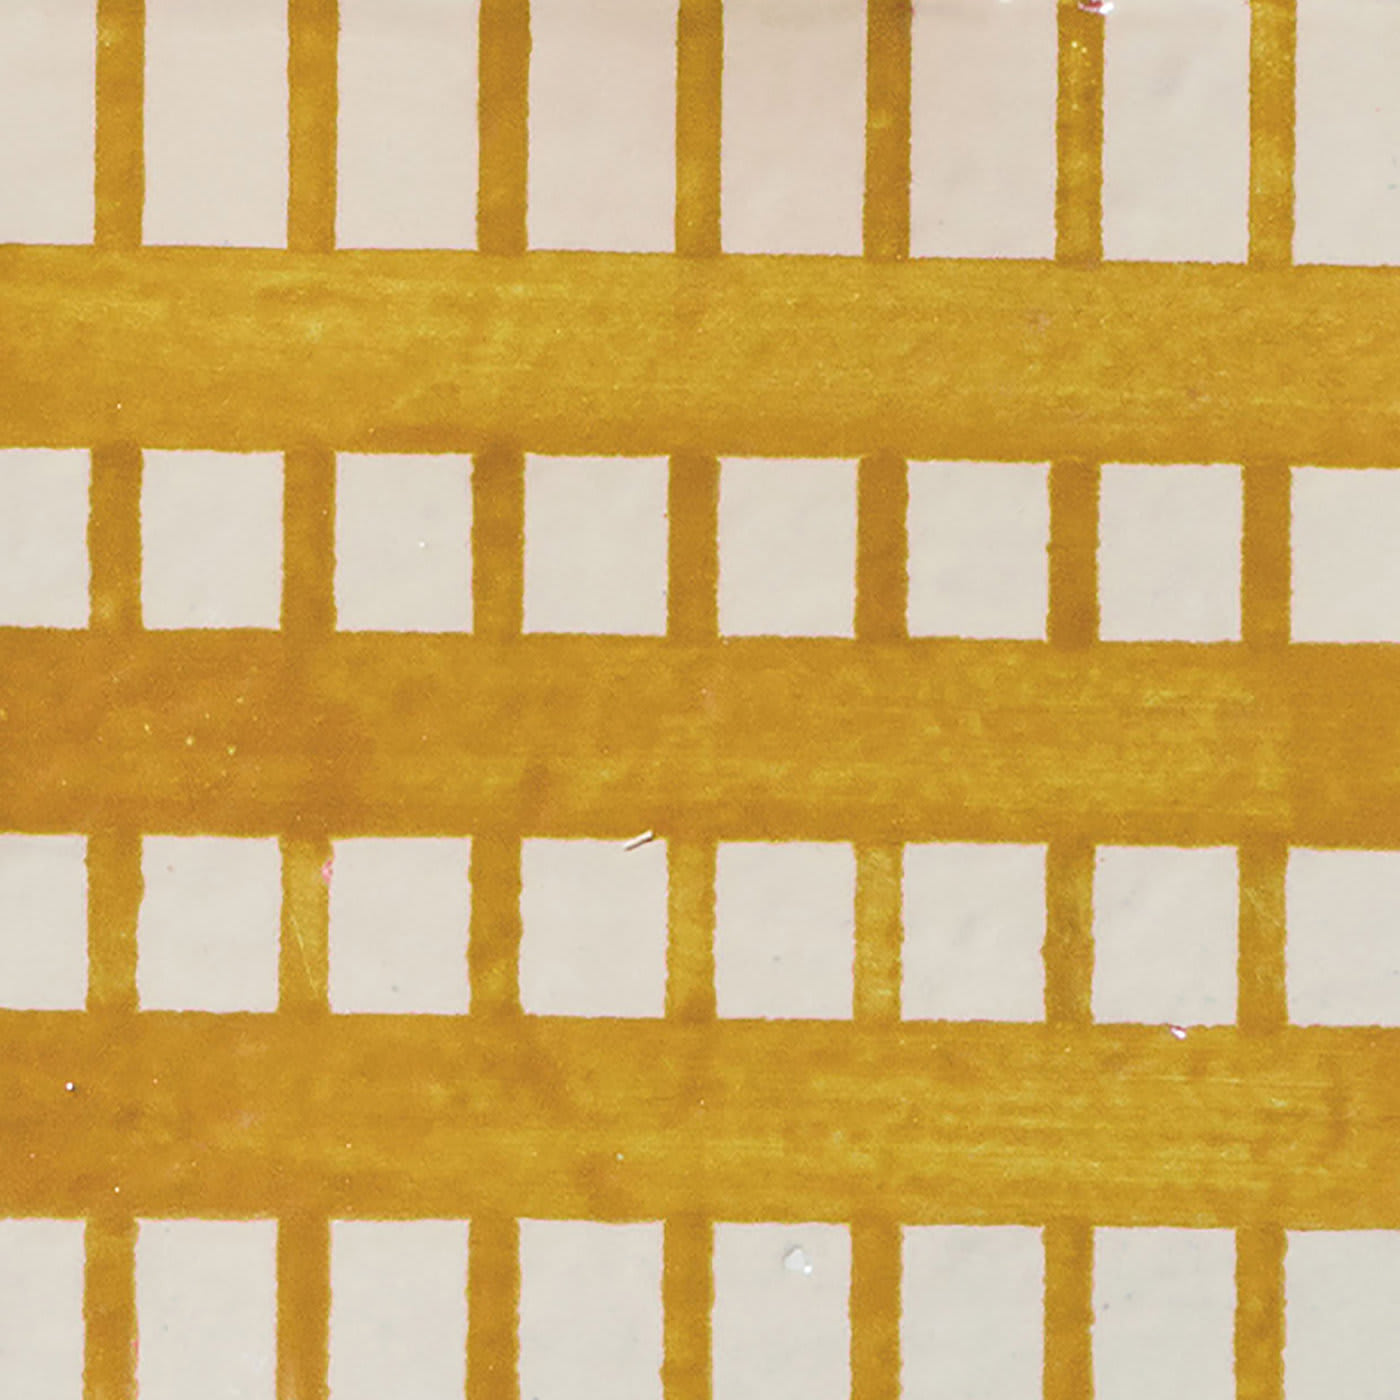 Alfabeto Set of 44 White and Yellow Tiles by Margherita Rui - Ninefifty